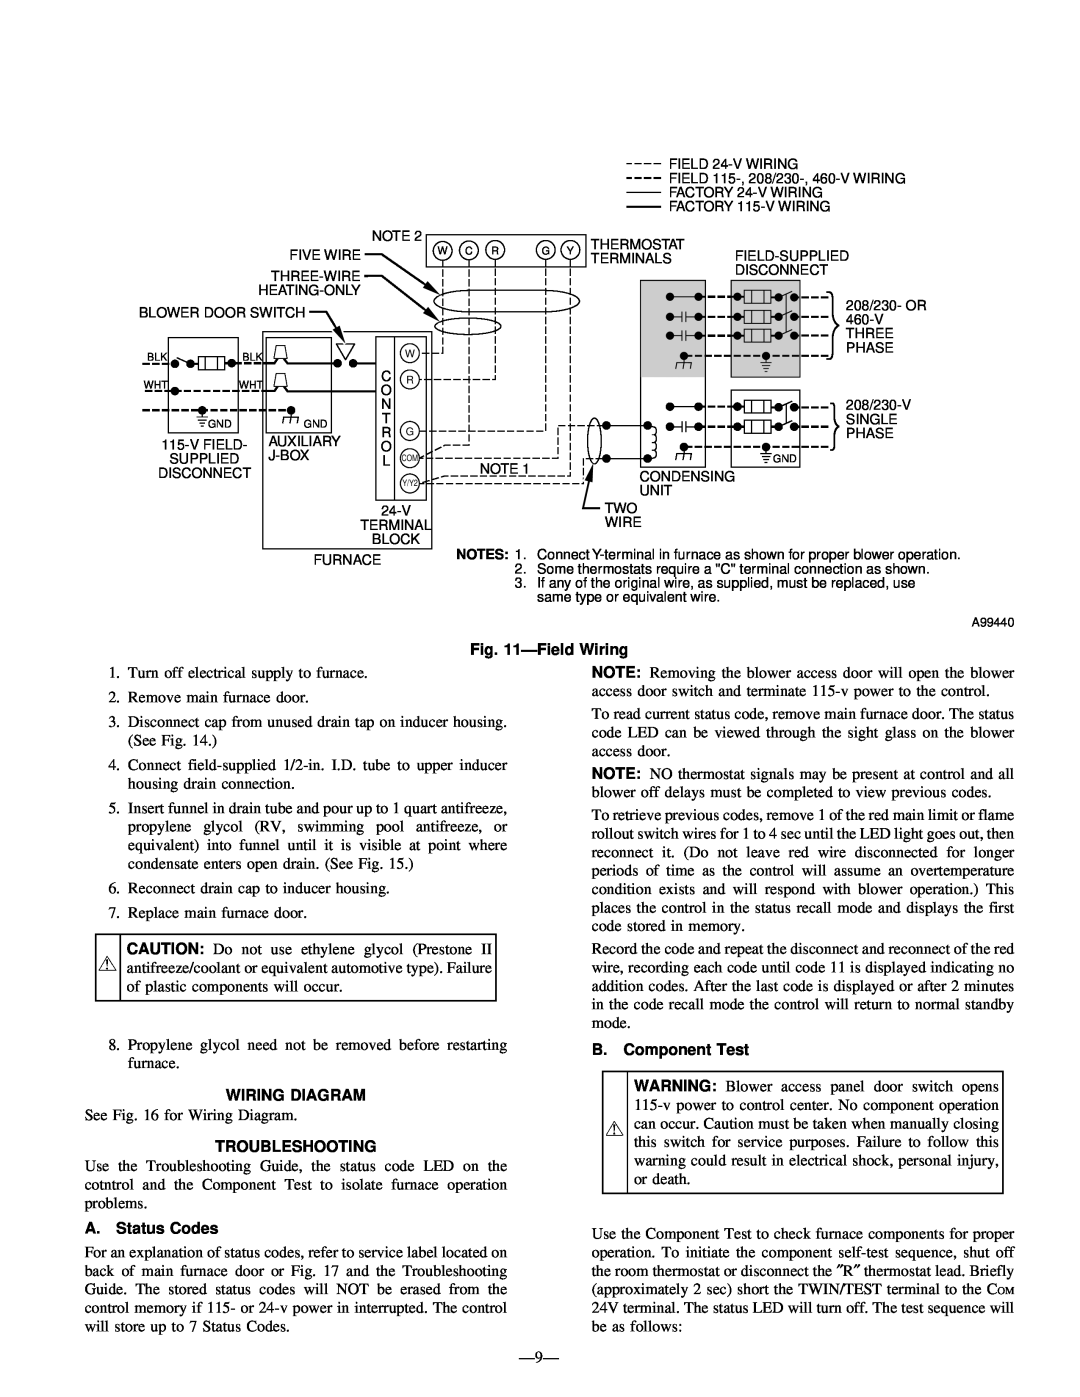 Bryant 350MAV user manual FieldWiring, B. Component Test, Wiring Diagram, Troubleshooting, A. Status Codes 